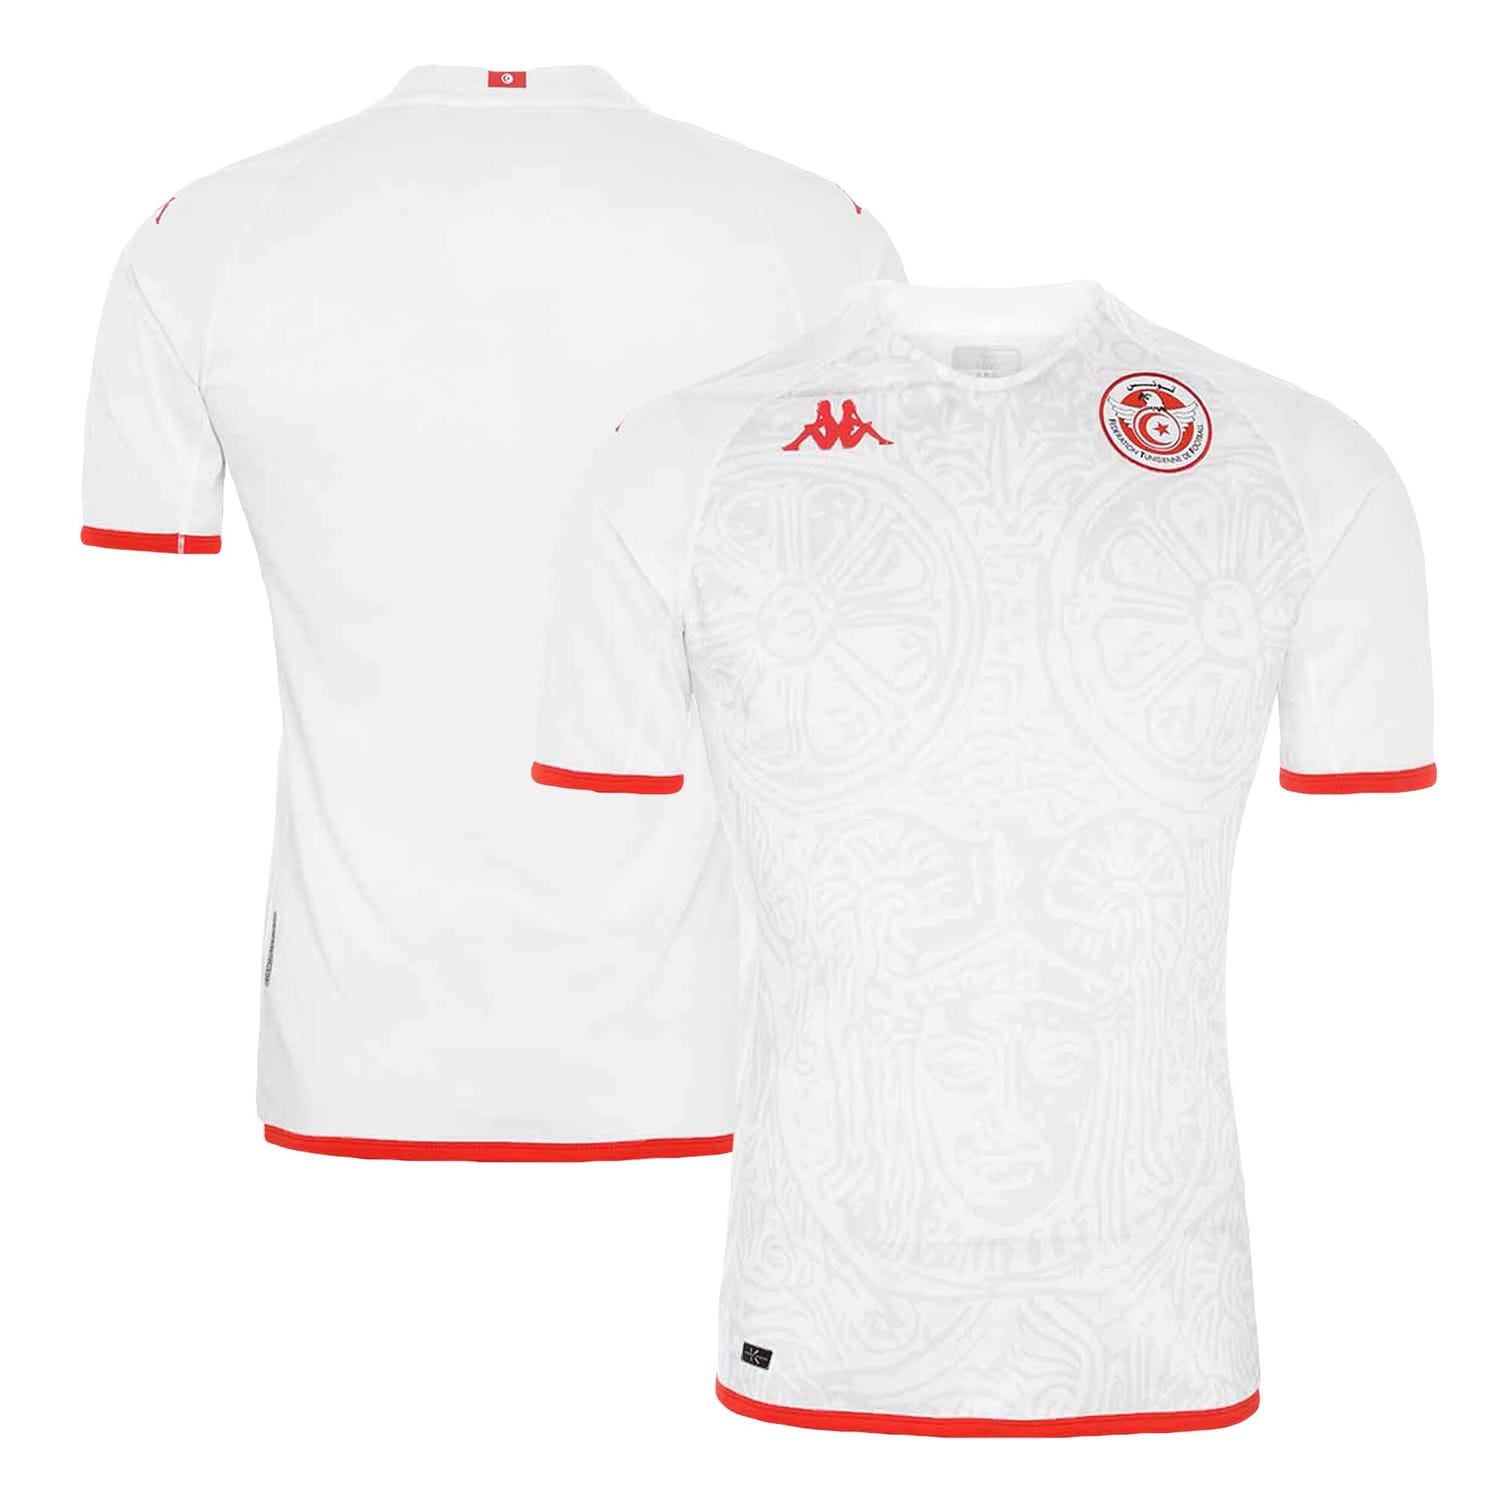 Tunisia National Team Away Jersey Shirt for Men